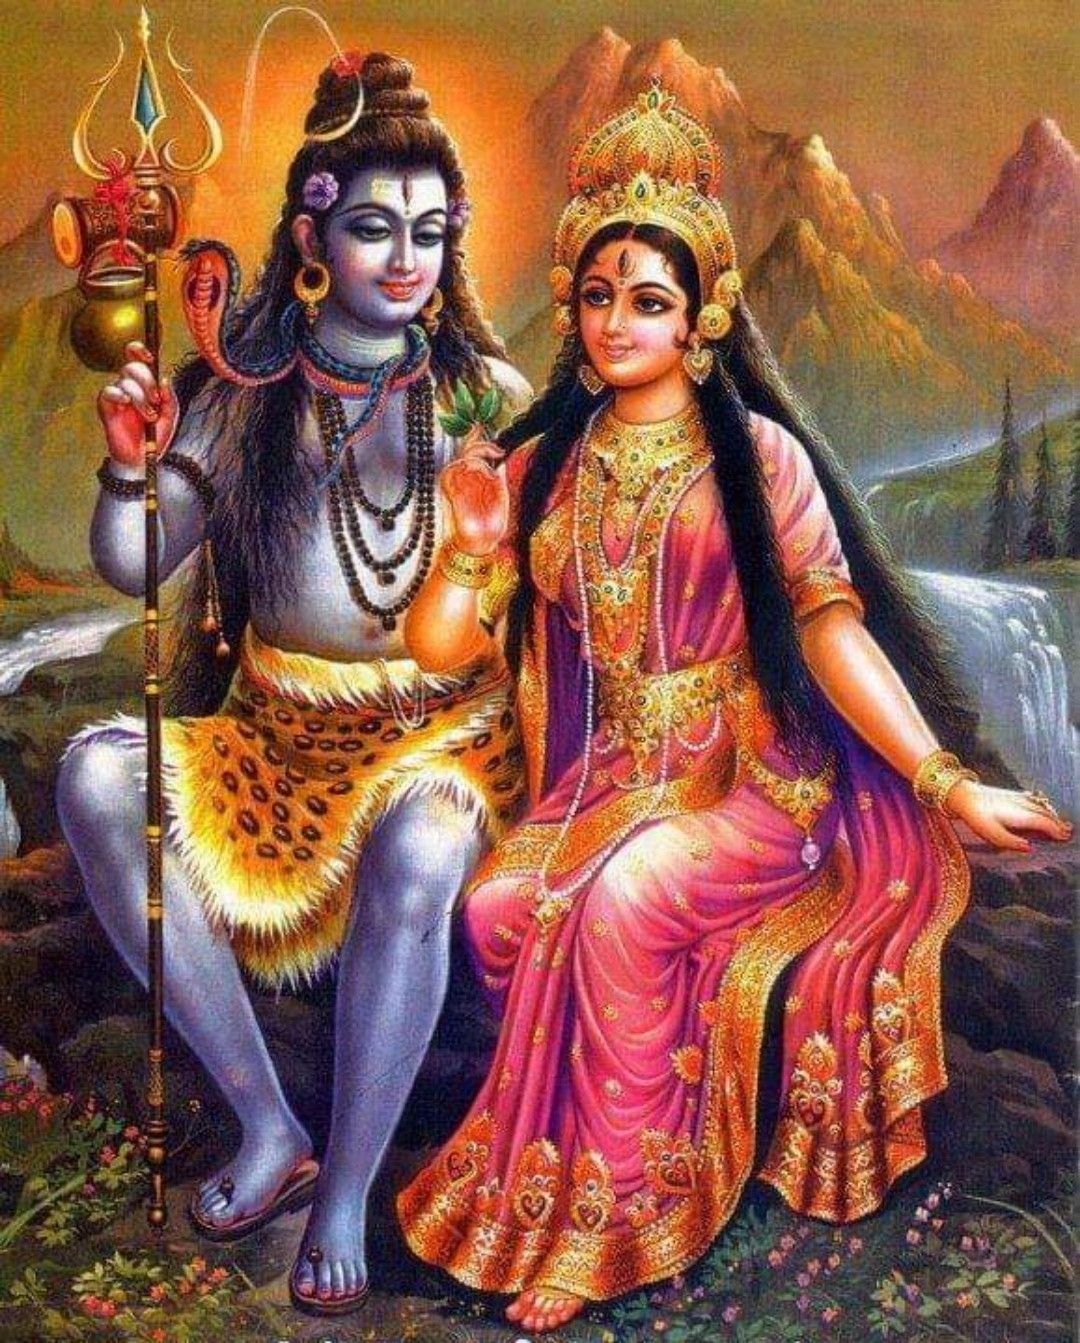 Sivan Images - Mahadev - Parvati Devi - Hindu God